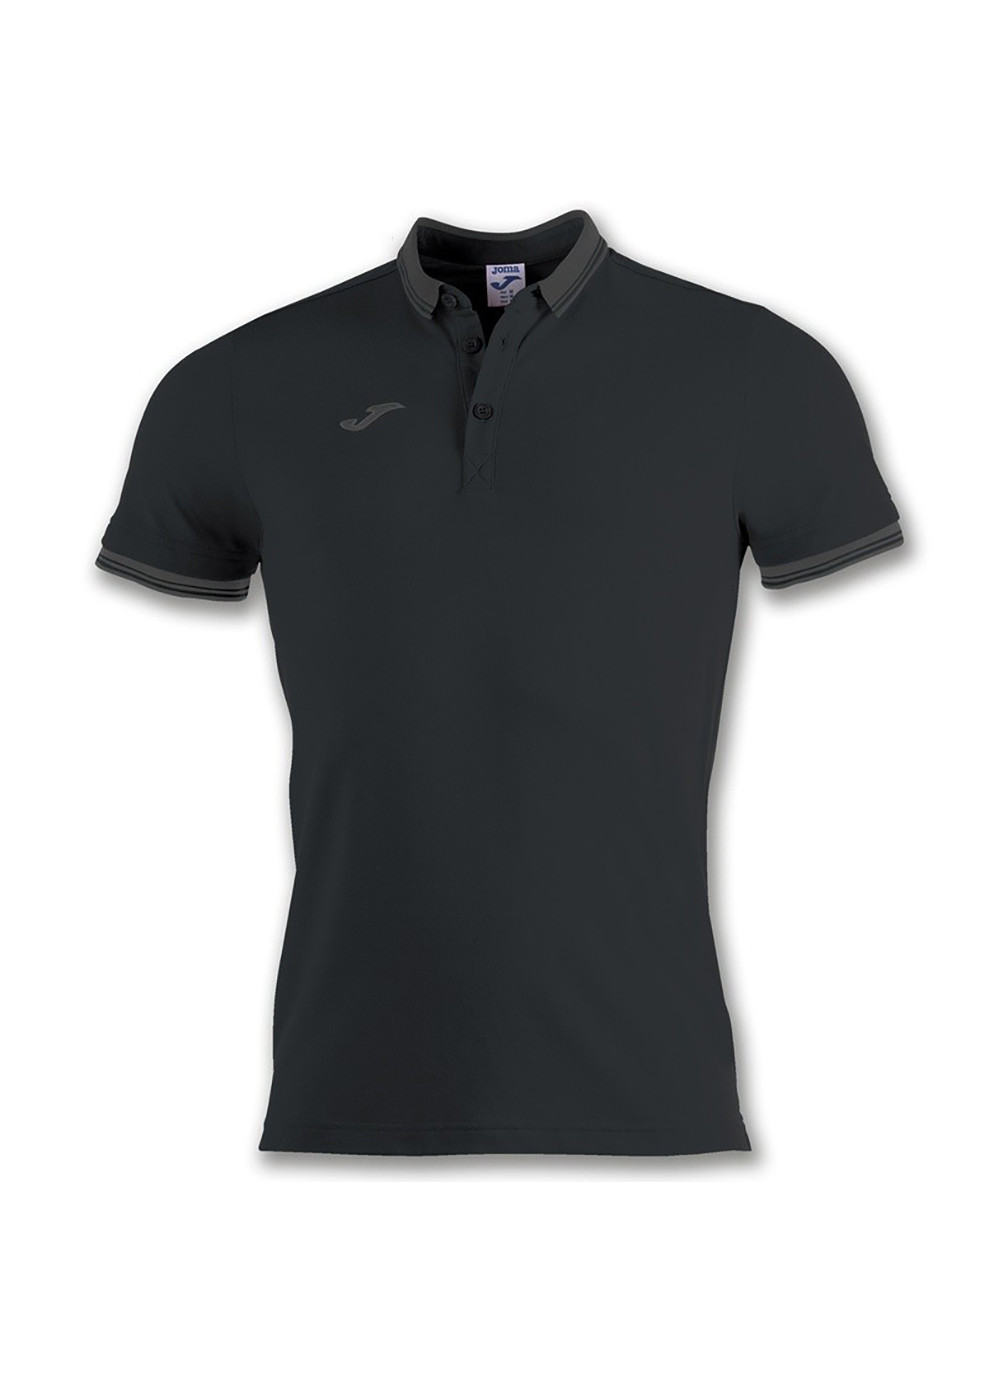 Черная футболка-поло polo shirt bali ii black s/s черный для мужчин Joma